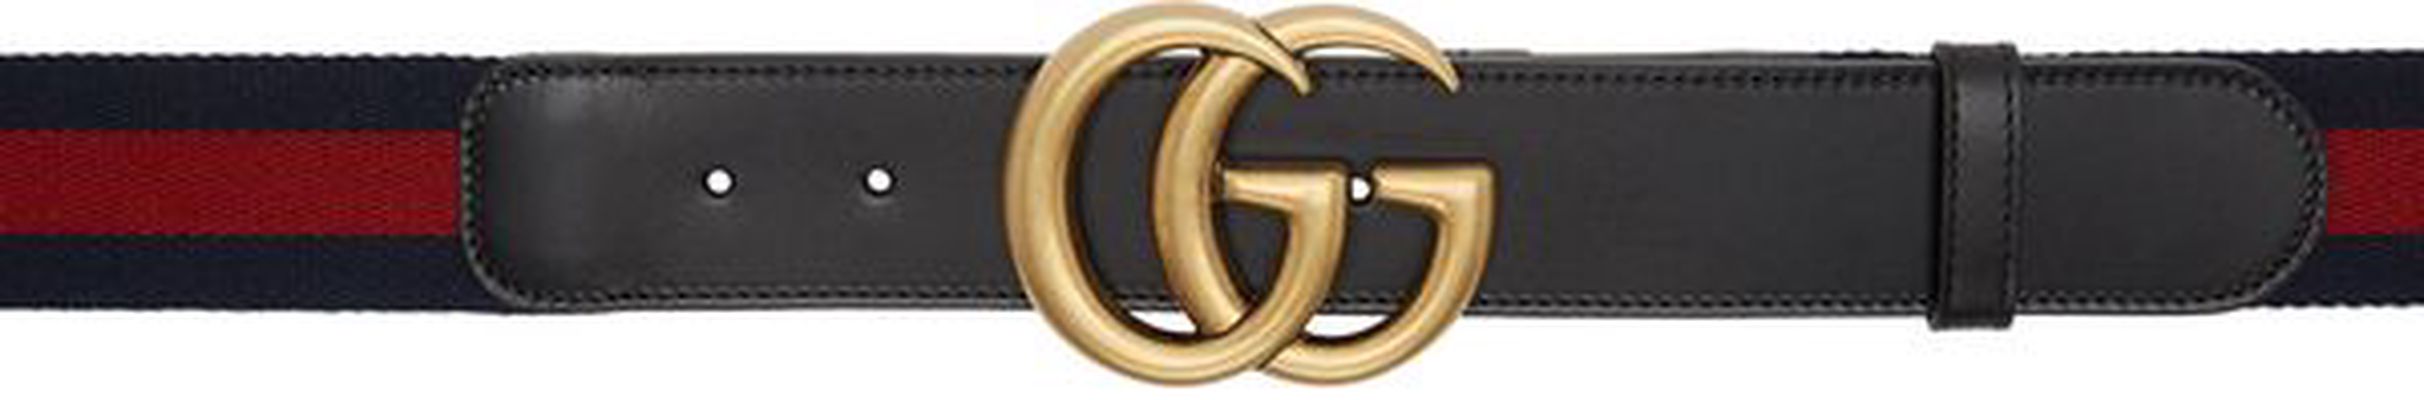 Gucci Black & Navy GG Belt